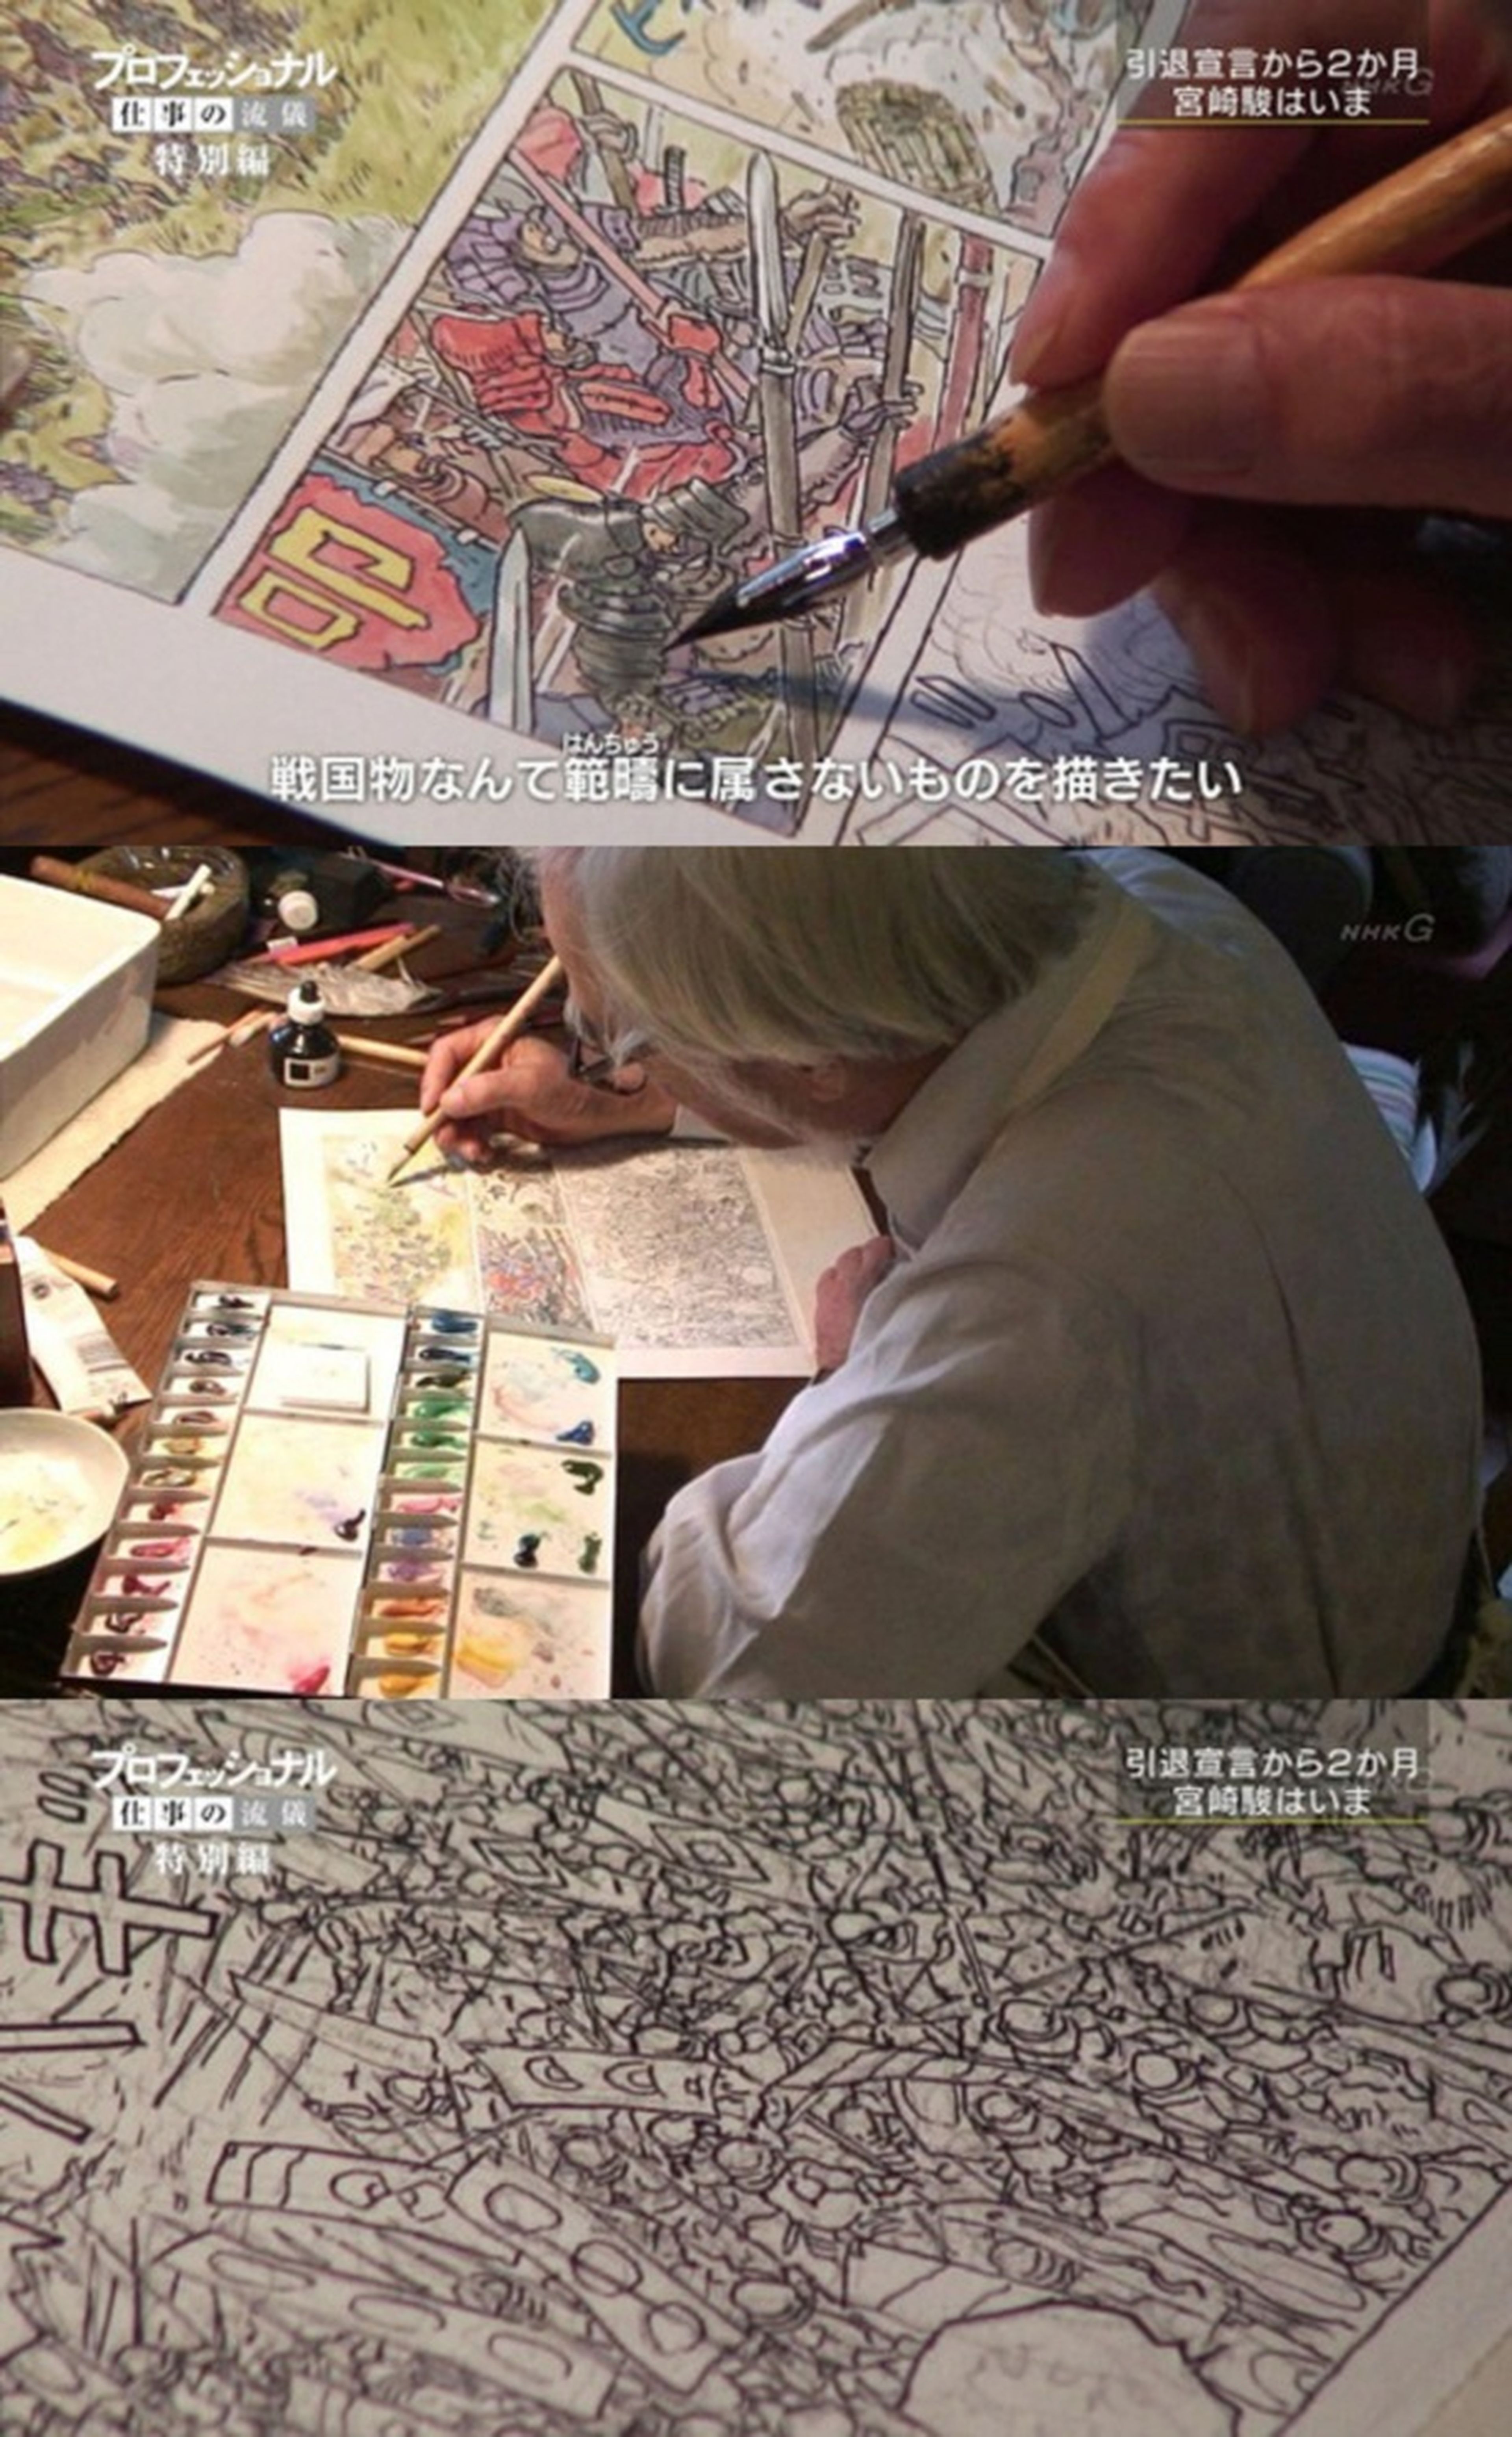 Hayao Miyazaki trabaja en un manga de samuráis